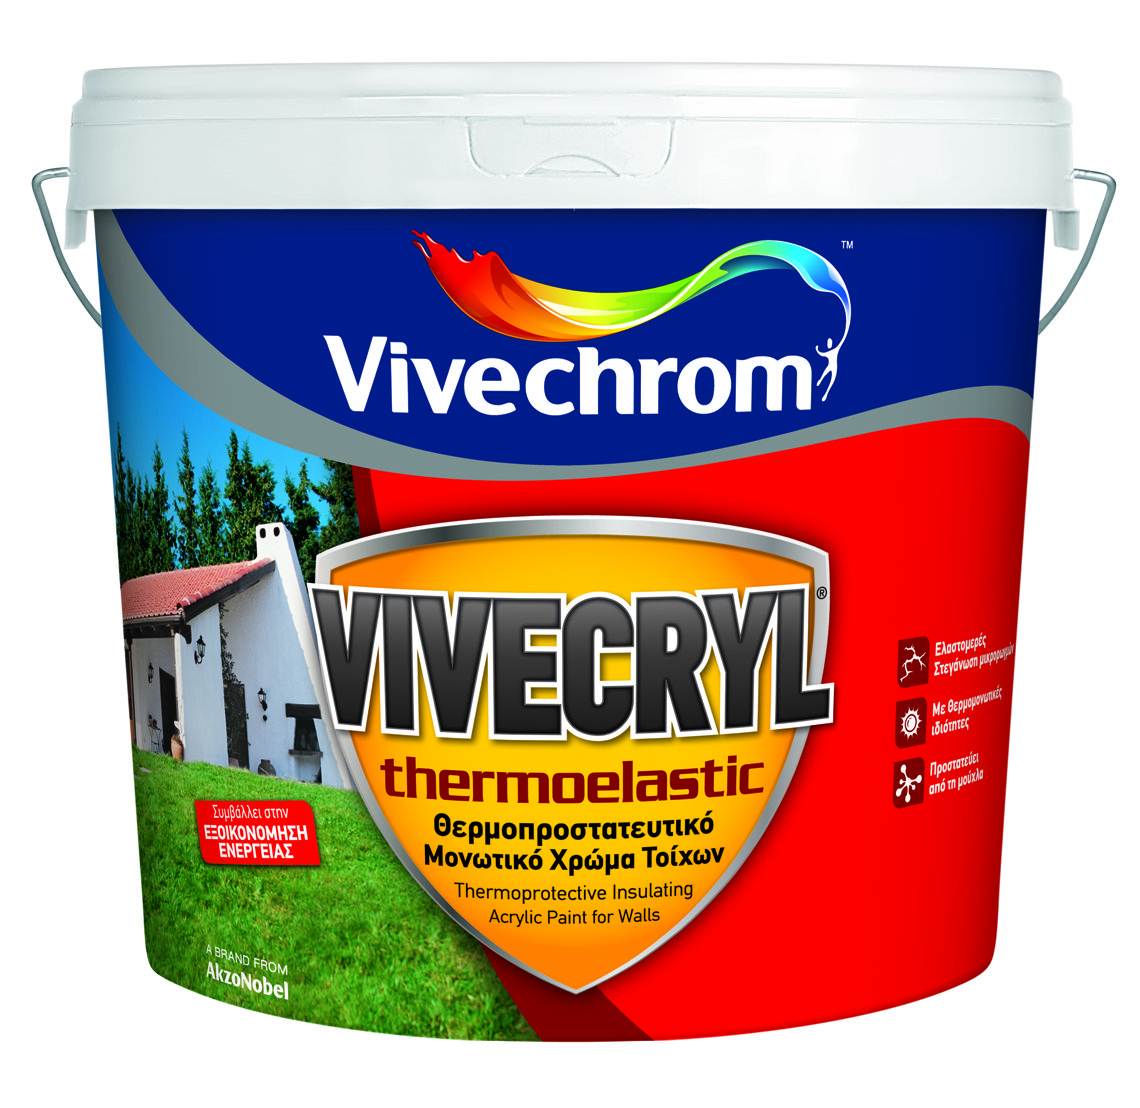 Vivechrom Vivecry Θερμοπροστατευτικό Οικολογικό Ακρυλική Βάση Matt Finish Mixing D 10L